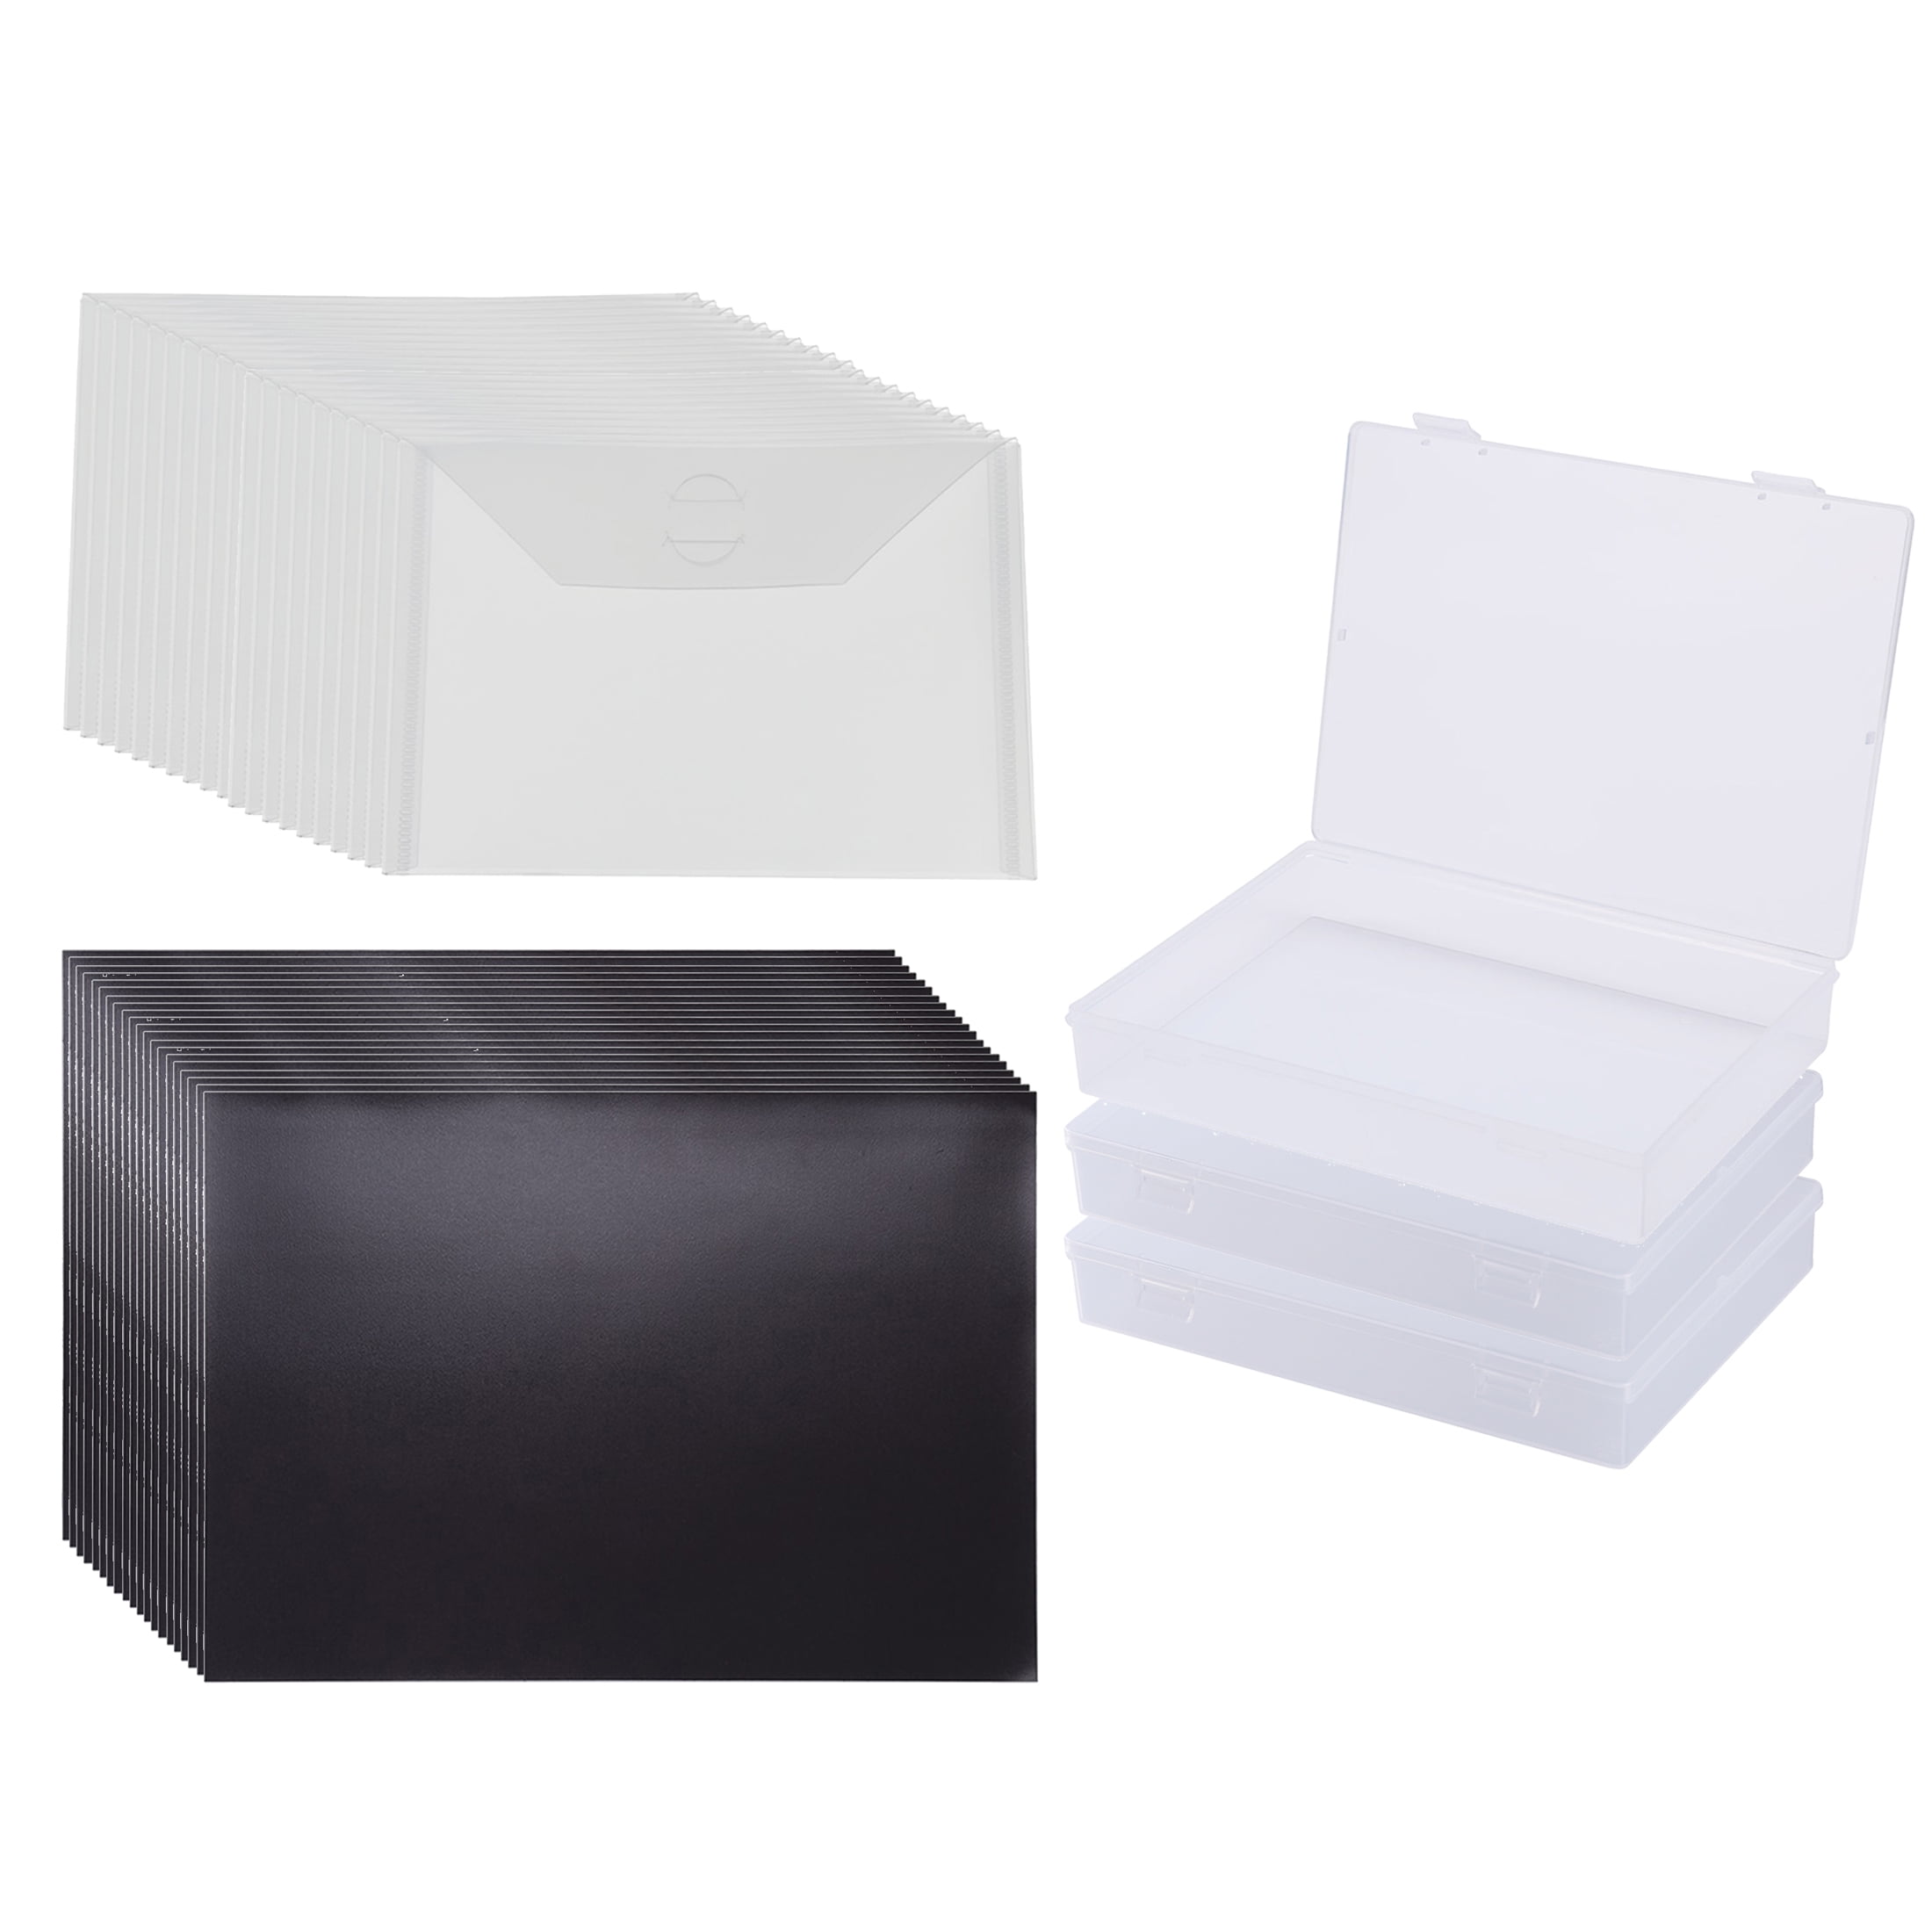 10PCS/set 7x5inch Rubber Magnet Sheet/Plastic Storage Bag Organize